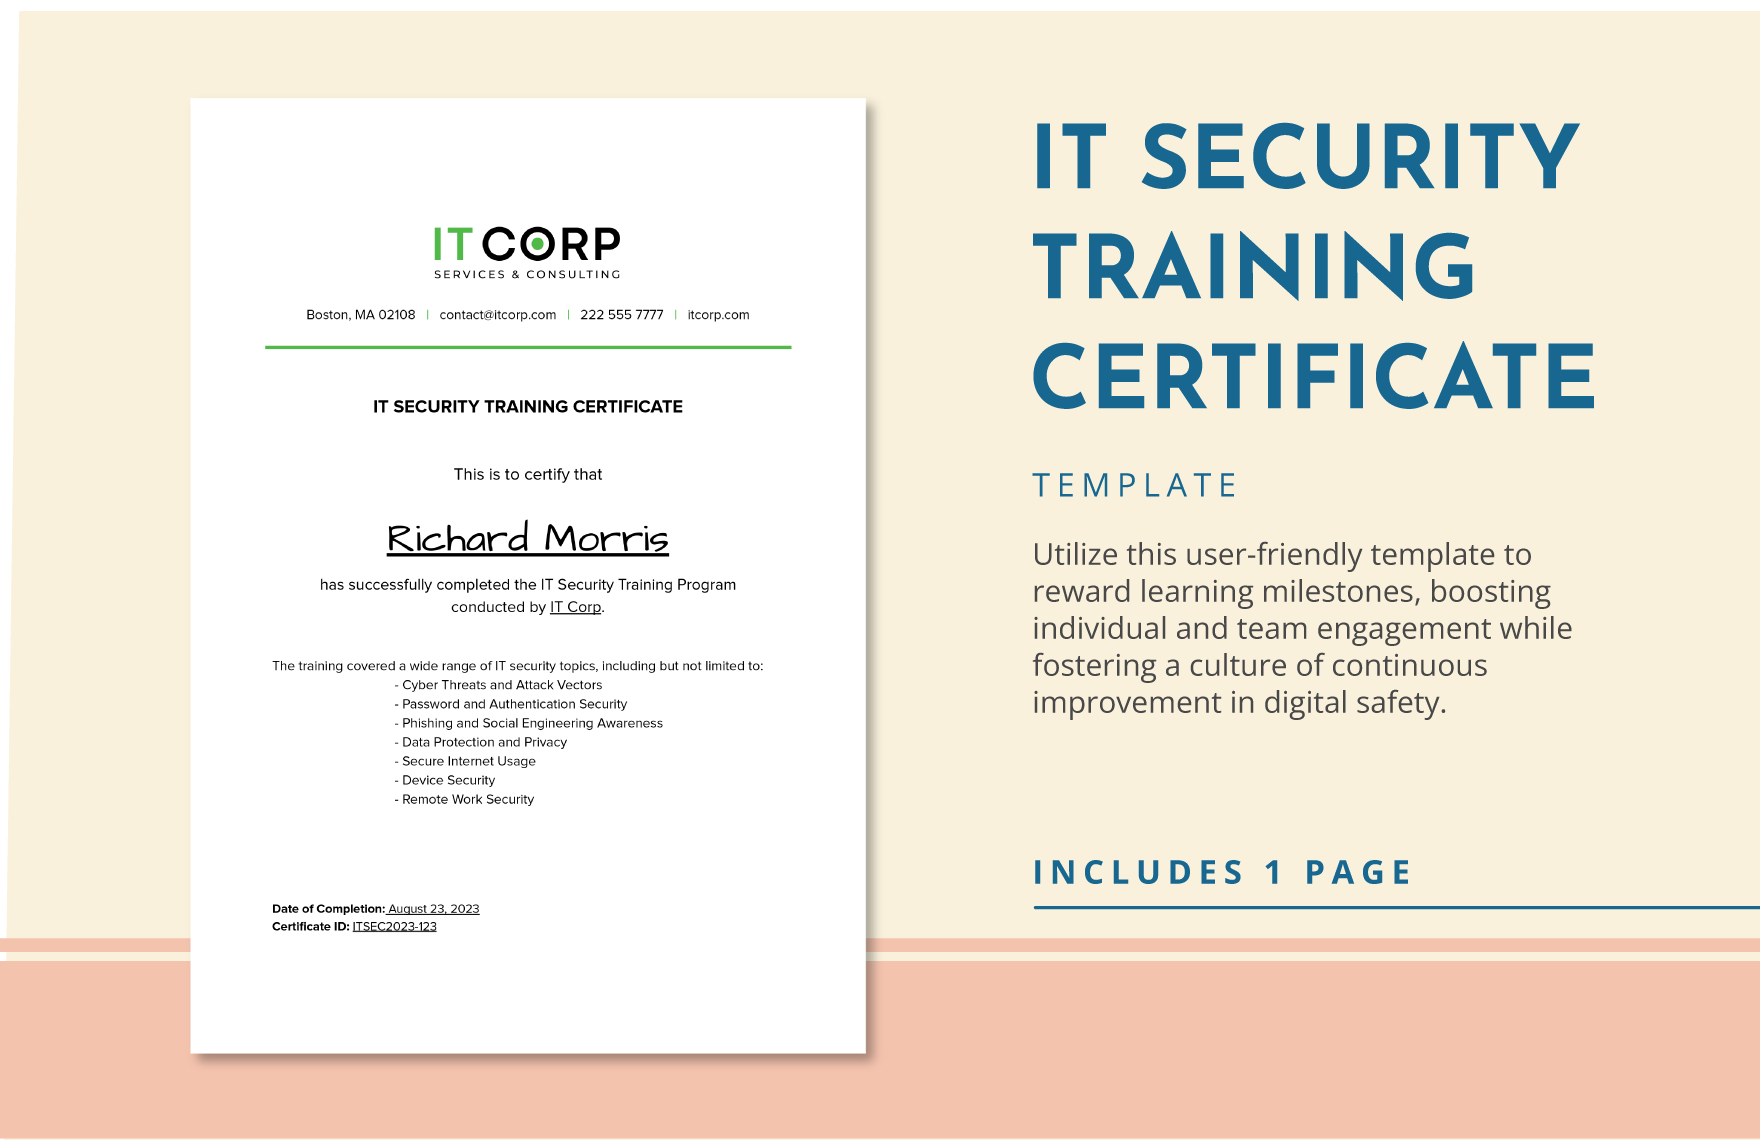 IT Security Training Certificate Template